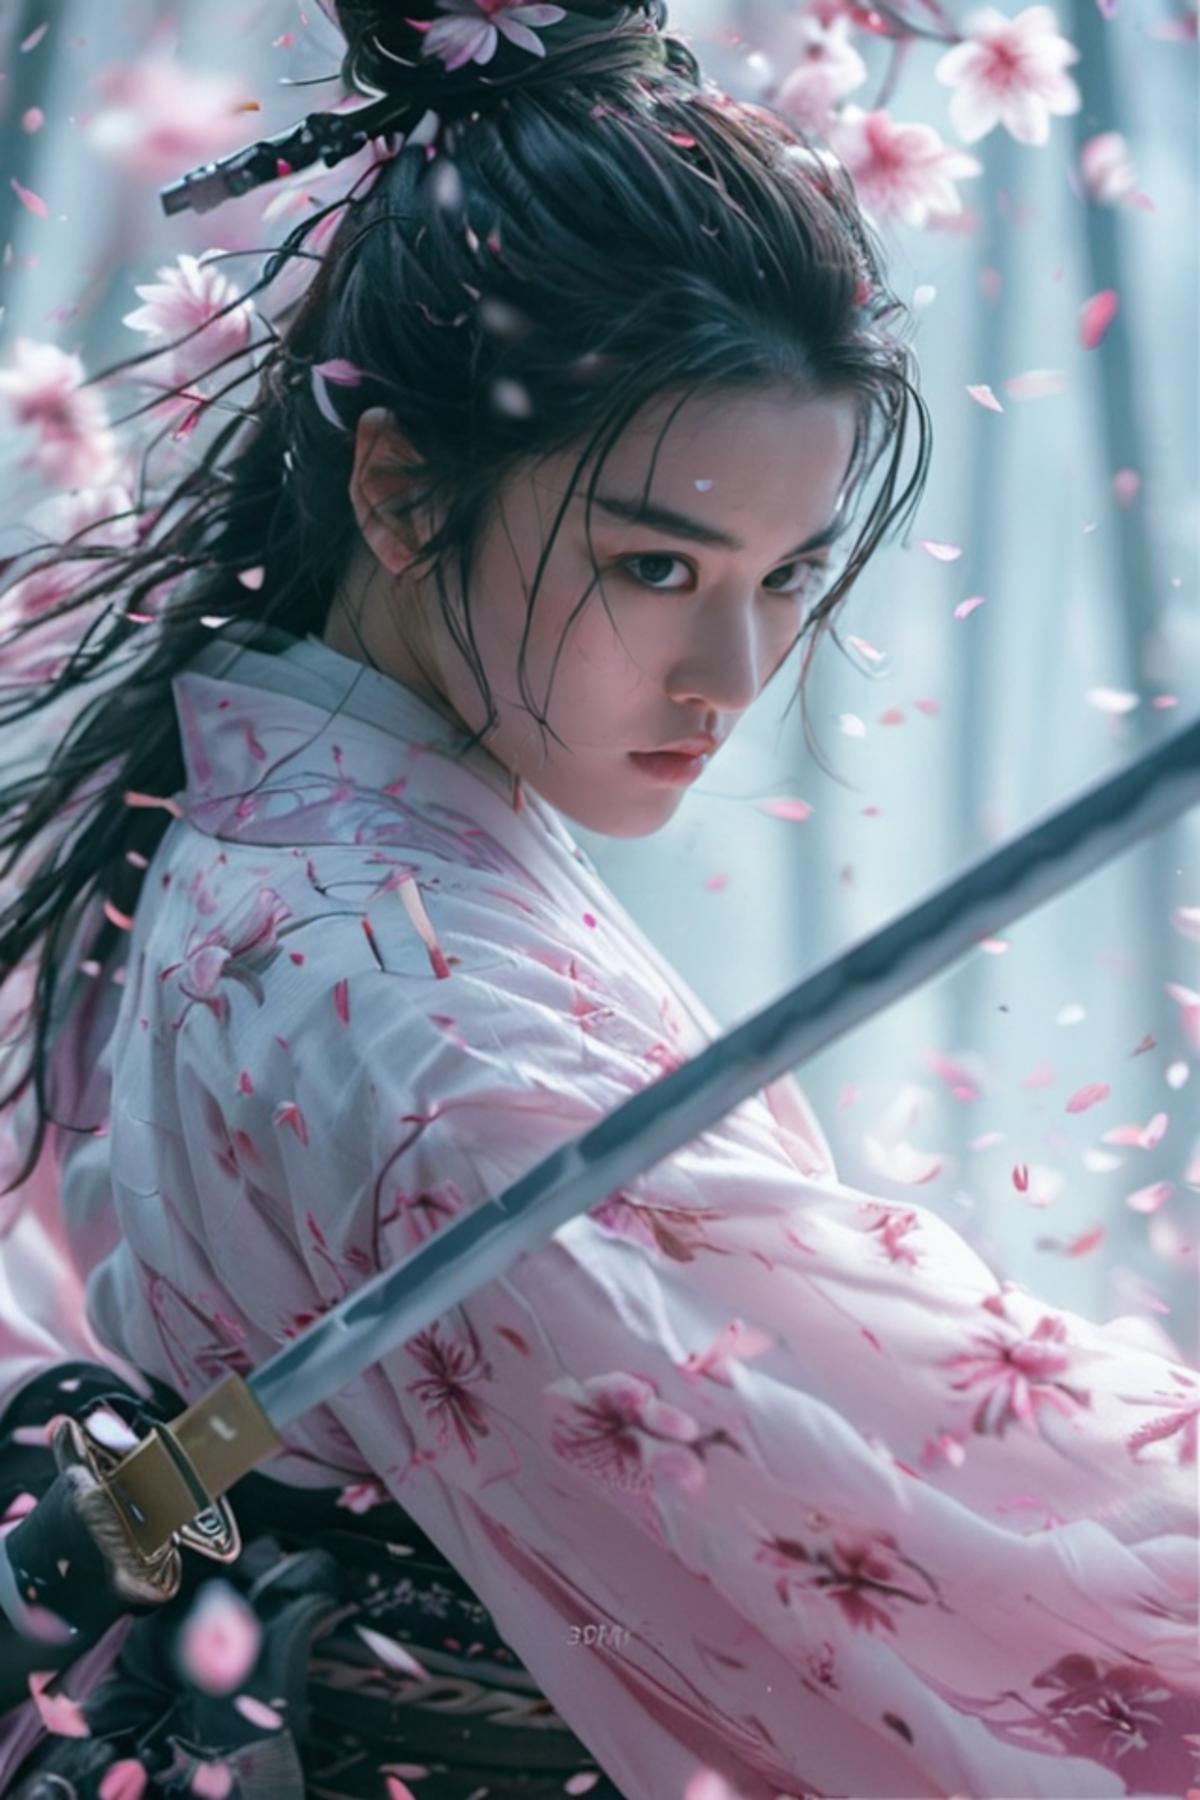 Sword Sakura剣桜(Photographic style) - XL | Stable Diffusion LoRA 